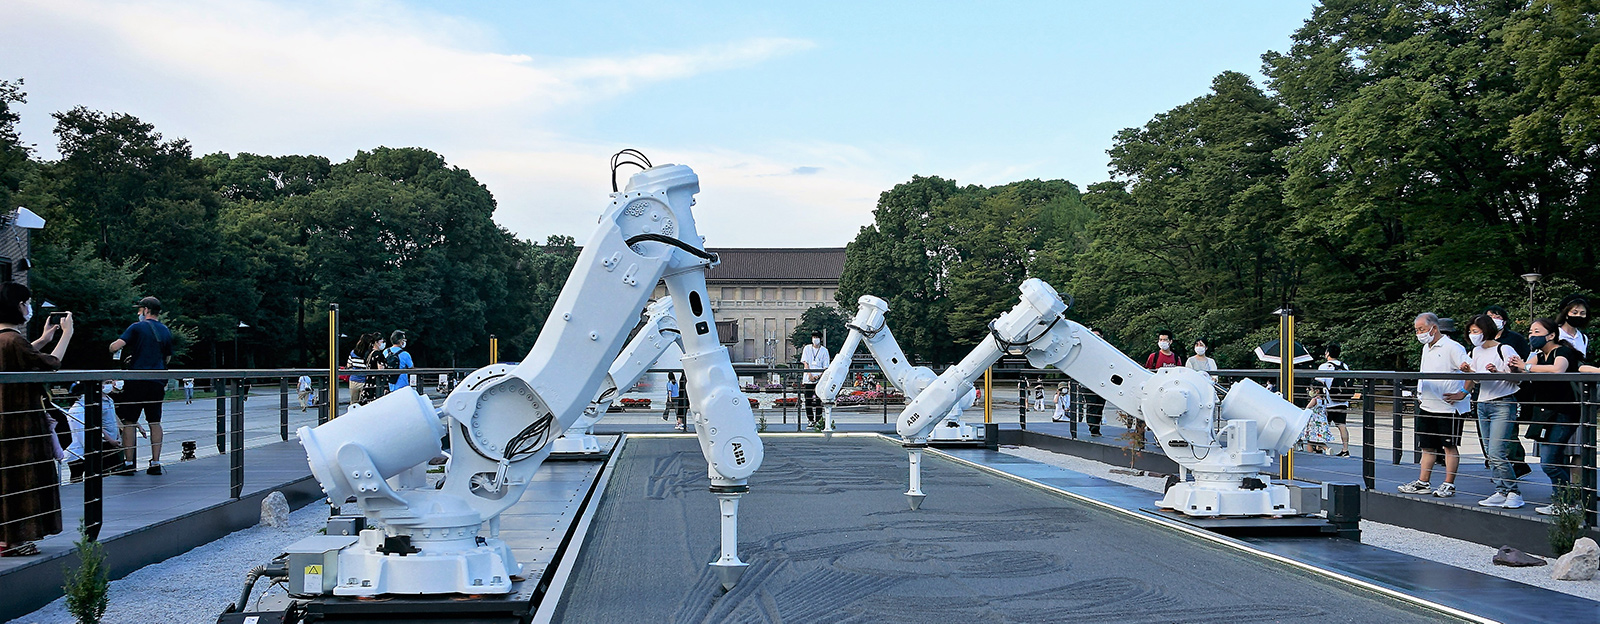 Art meets tech in Olympics installation